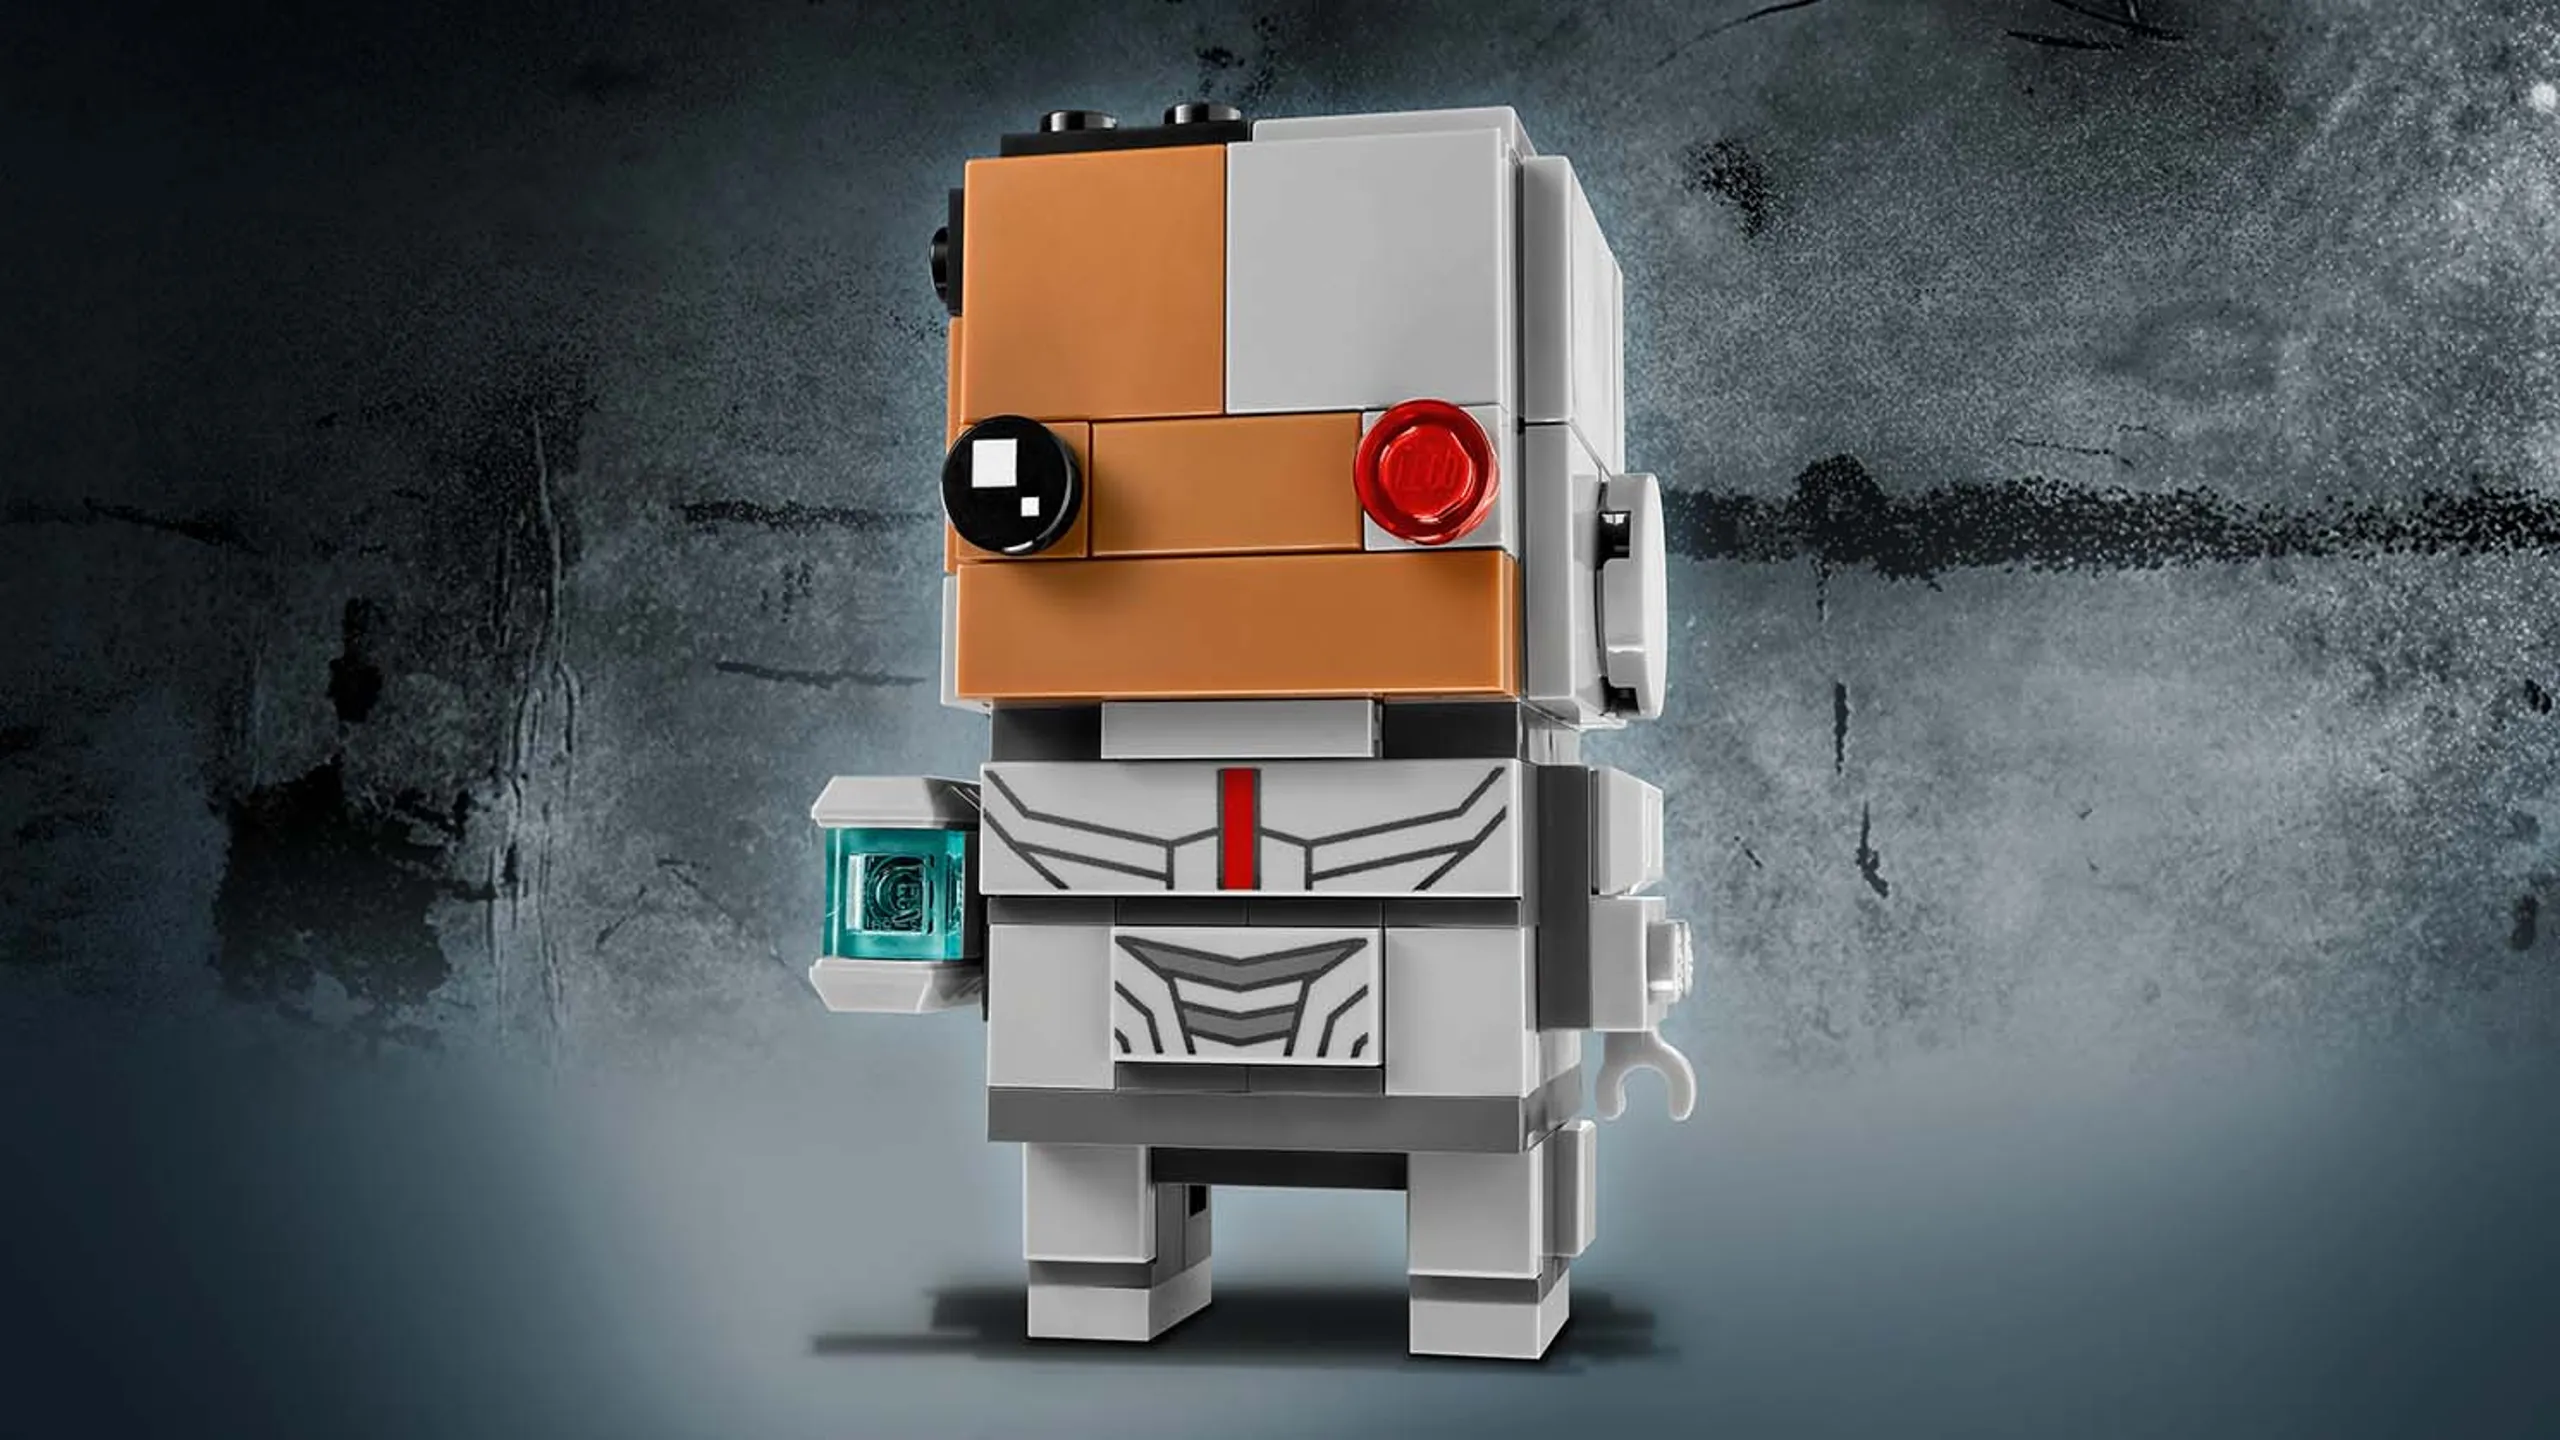 LEGO Brickheadz Cyborg - 41601 - Build the Brickheadz version of Cyborg from the Justice League movie.